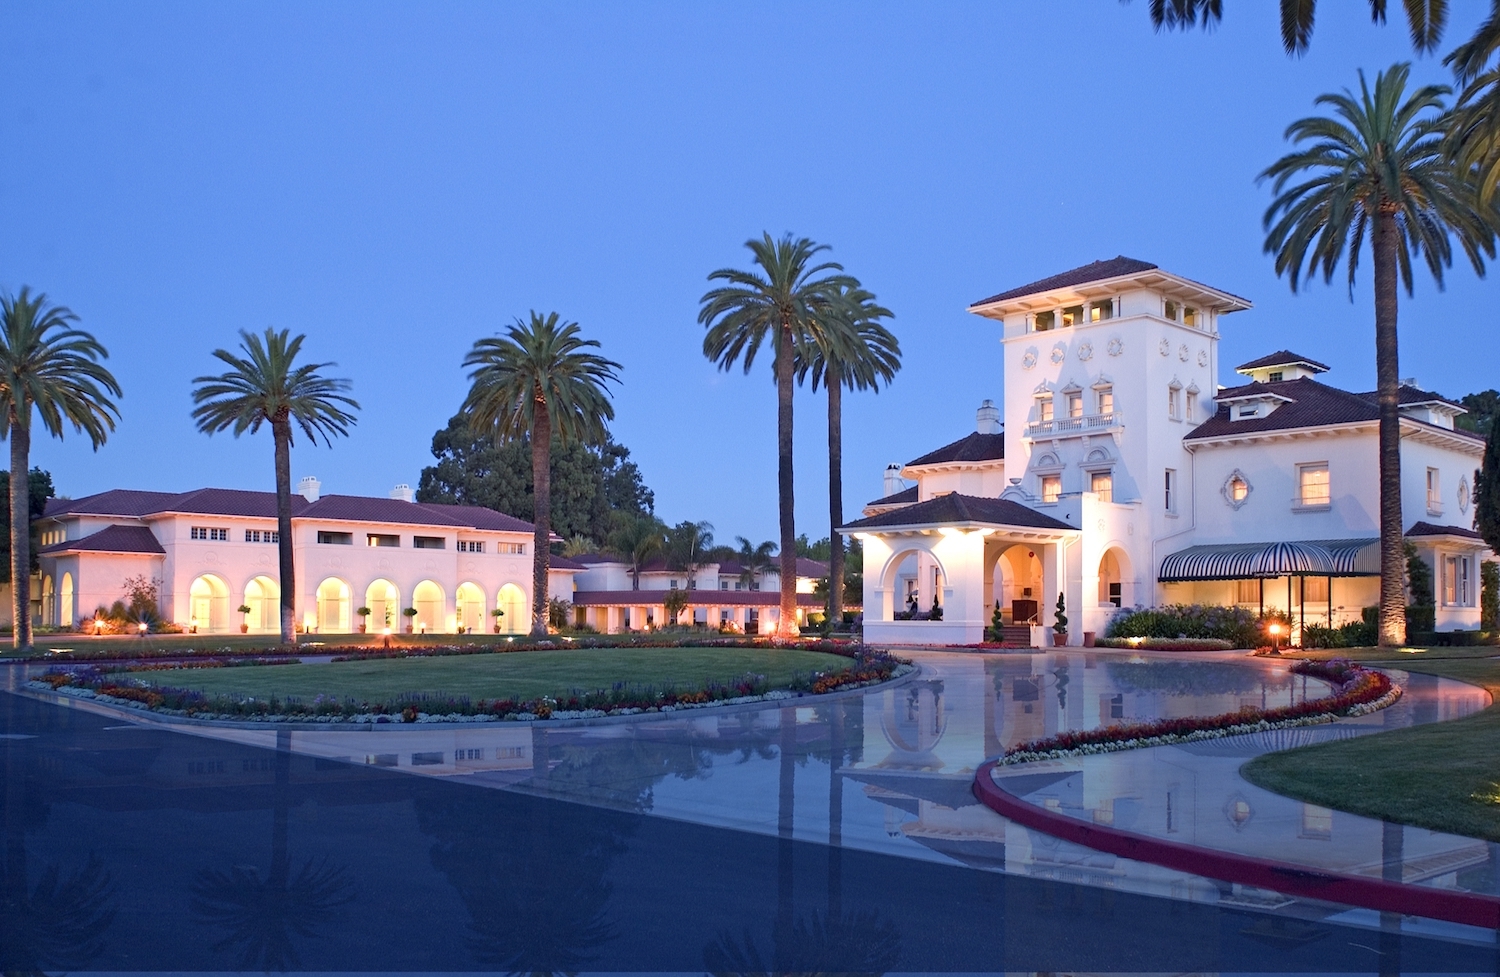 Photo of Hayes Mansion San Jose, Curio Collection by Hilton, San Jose, CA